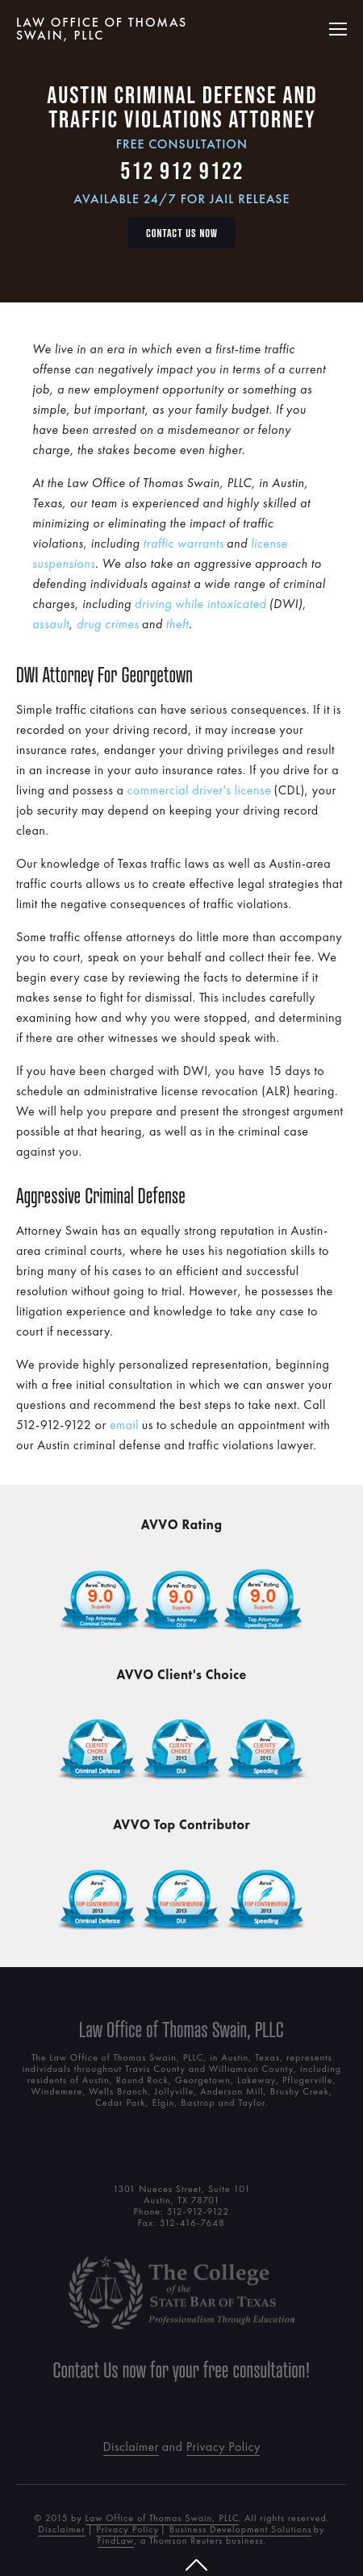 Law Office of Thomas Swain, PLLC - Austin TX Lawyers